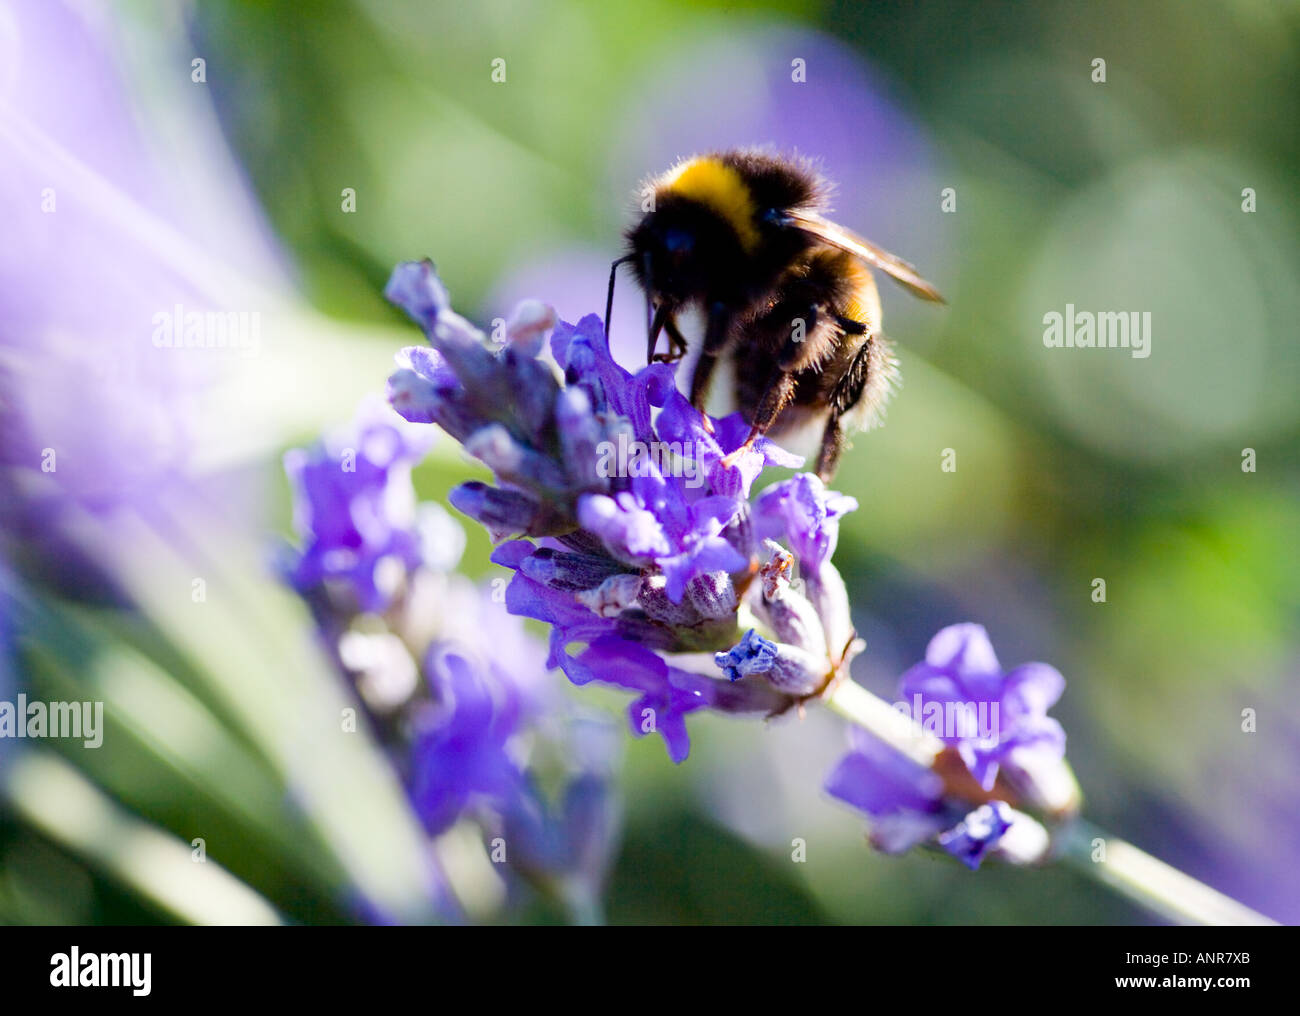 COMMON NAME: Bumble bee on Lavender flower LATIN NAME: Lavandula Stock Photo